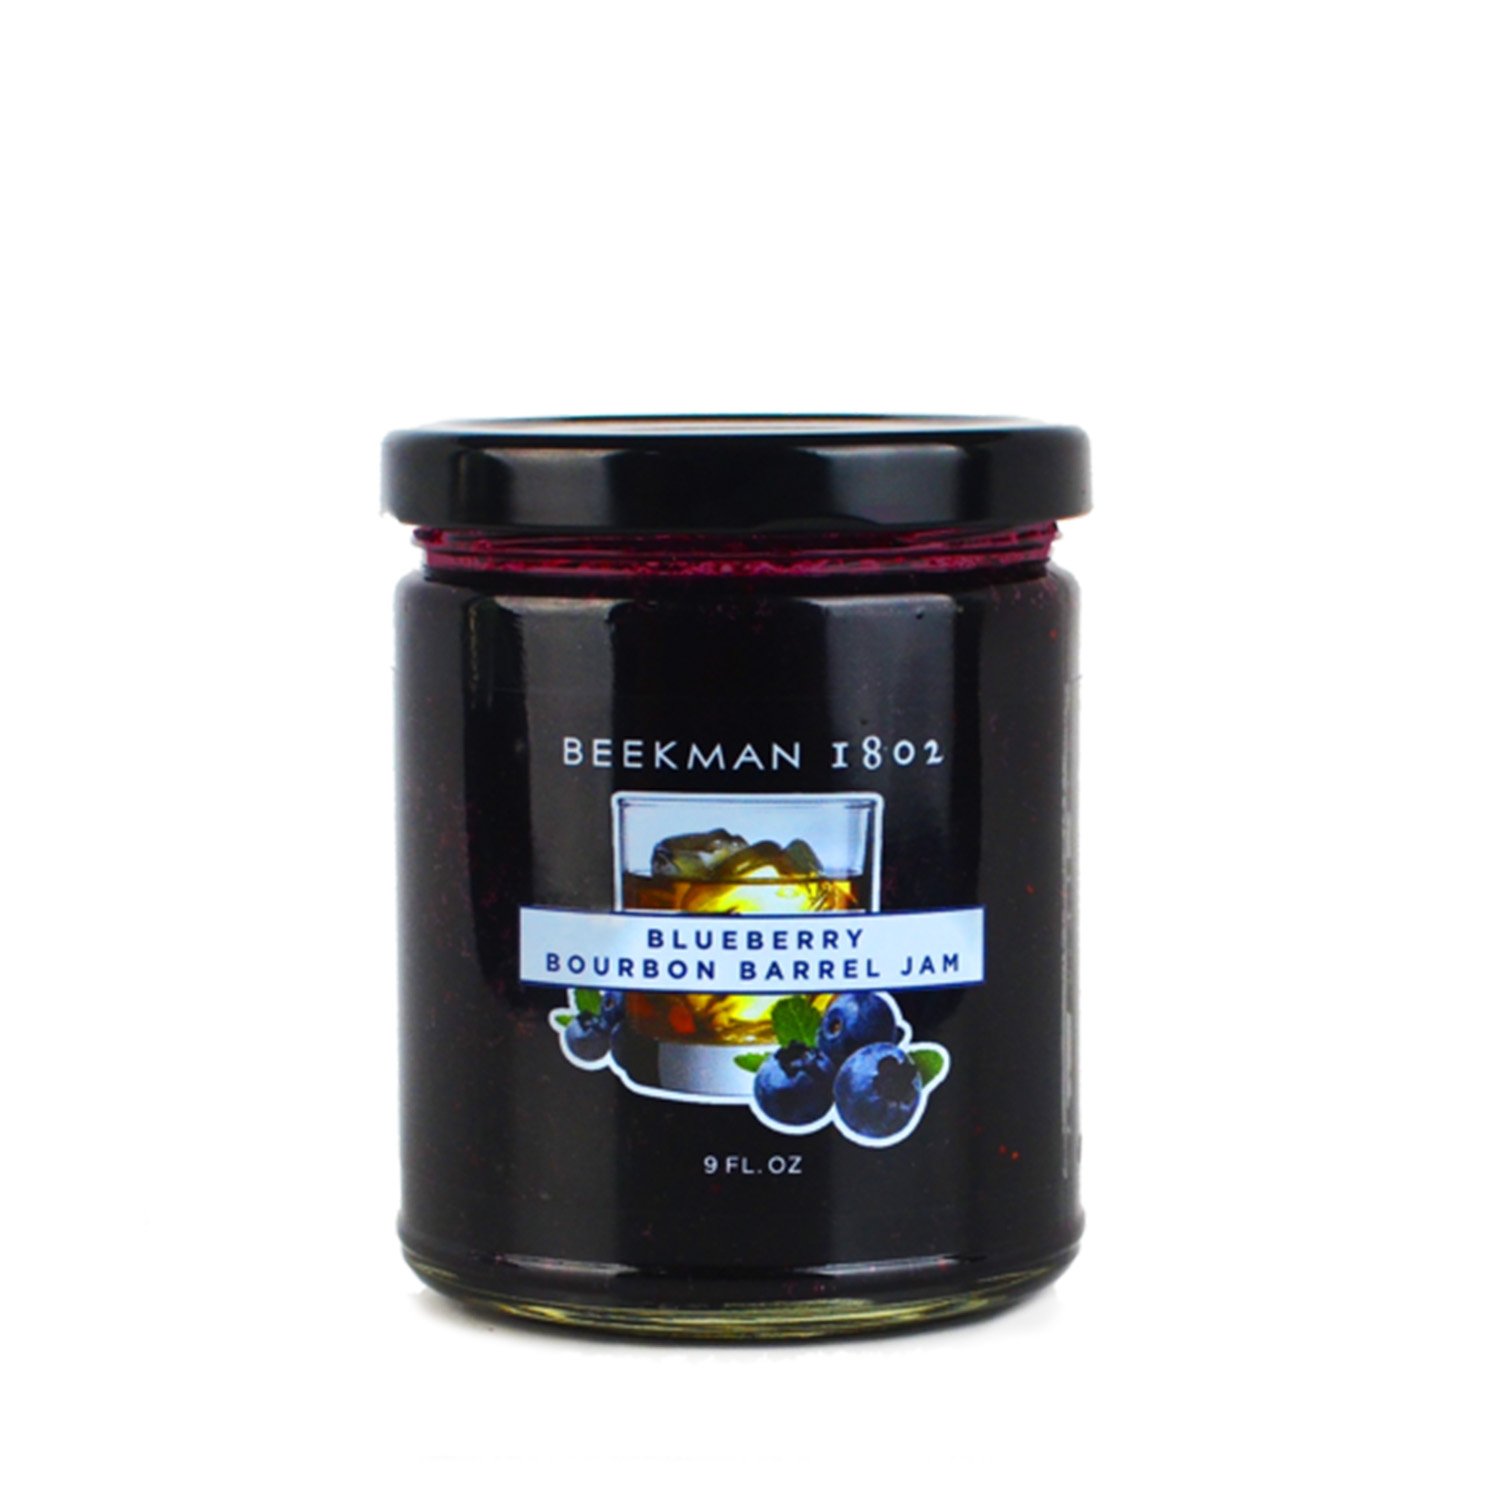 Blueberry Bourbon Barrel Jam